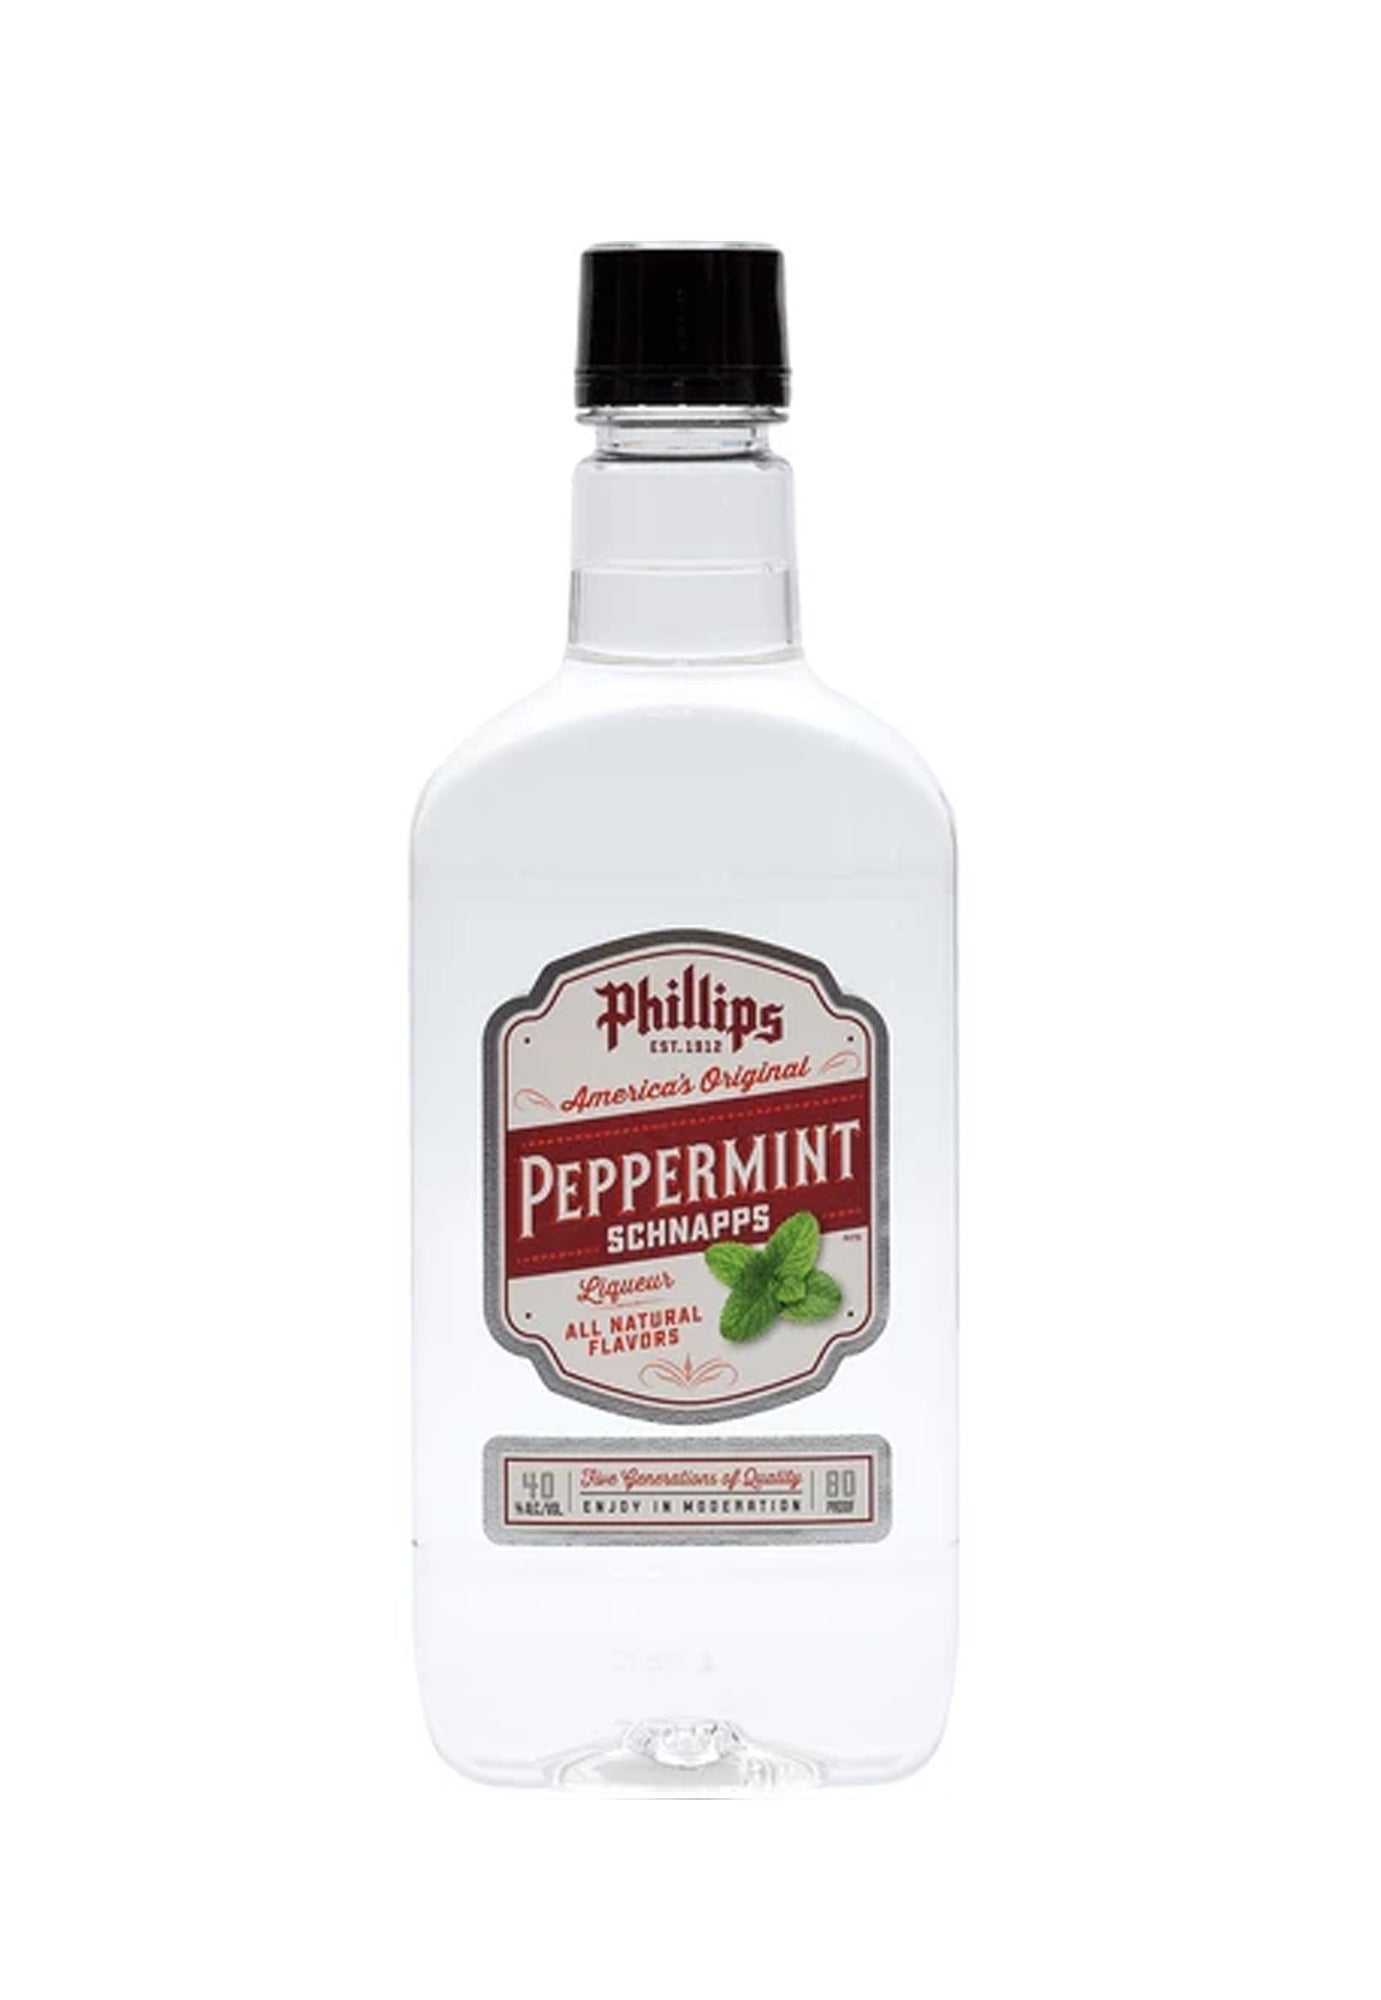 Phillips Peppermint Schnapps - 375 ml